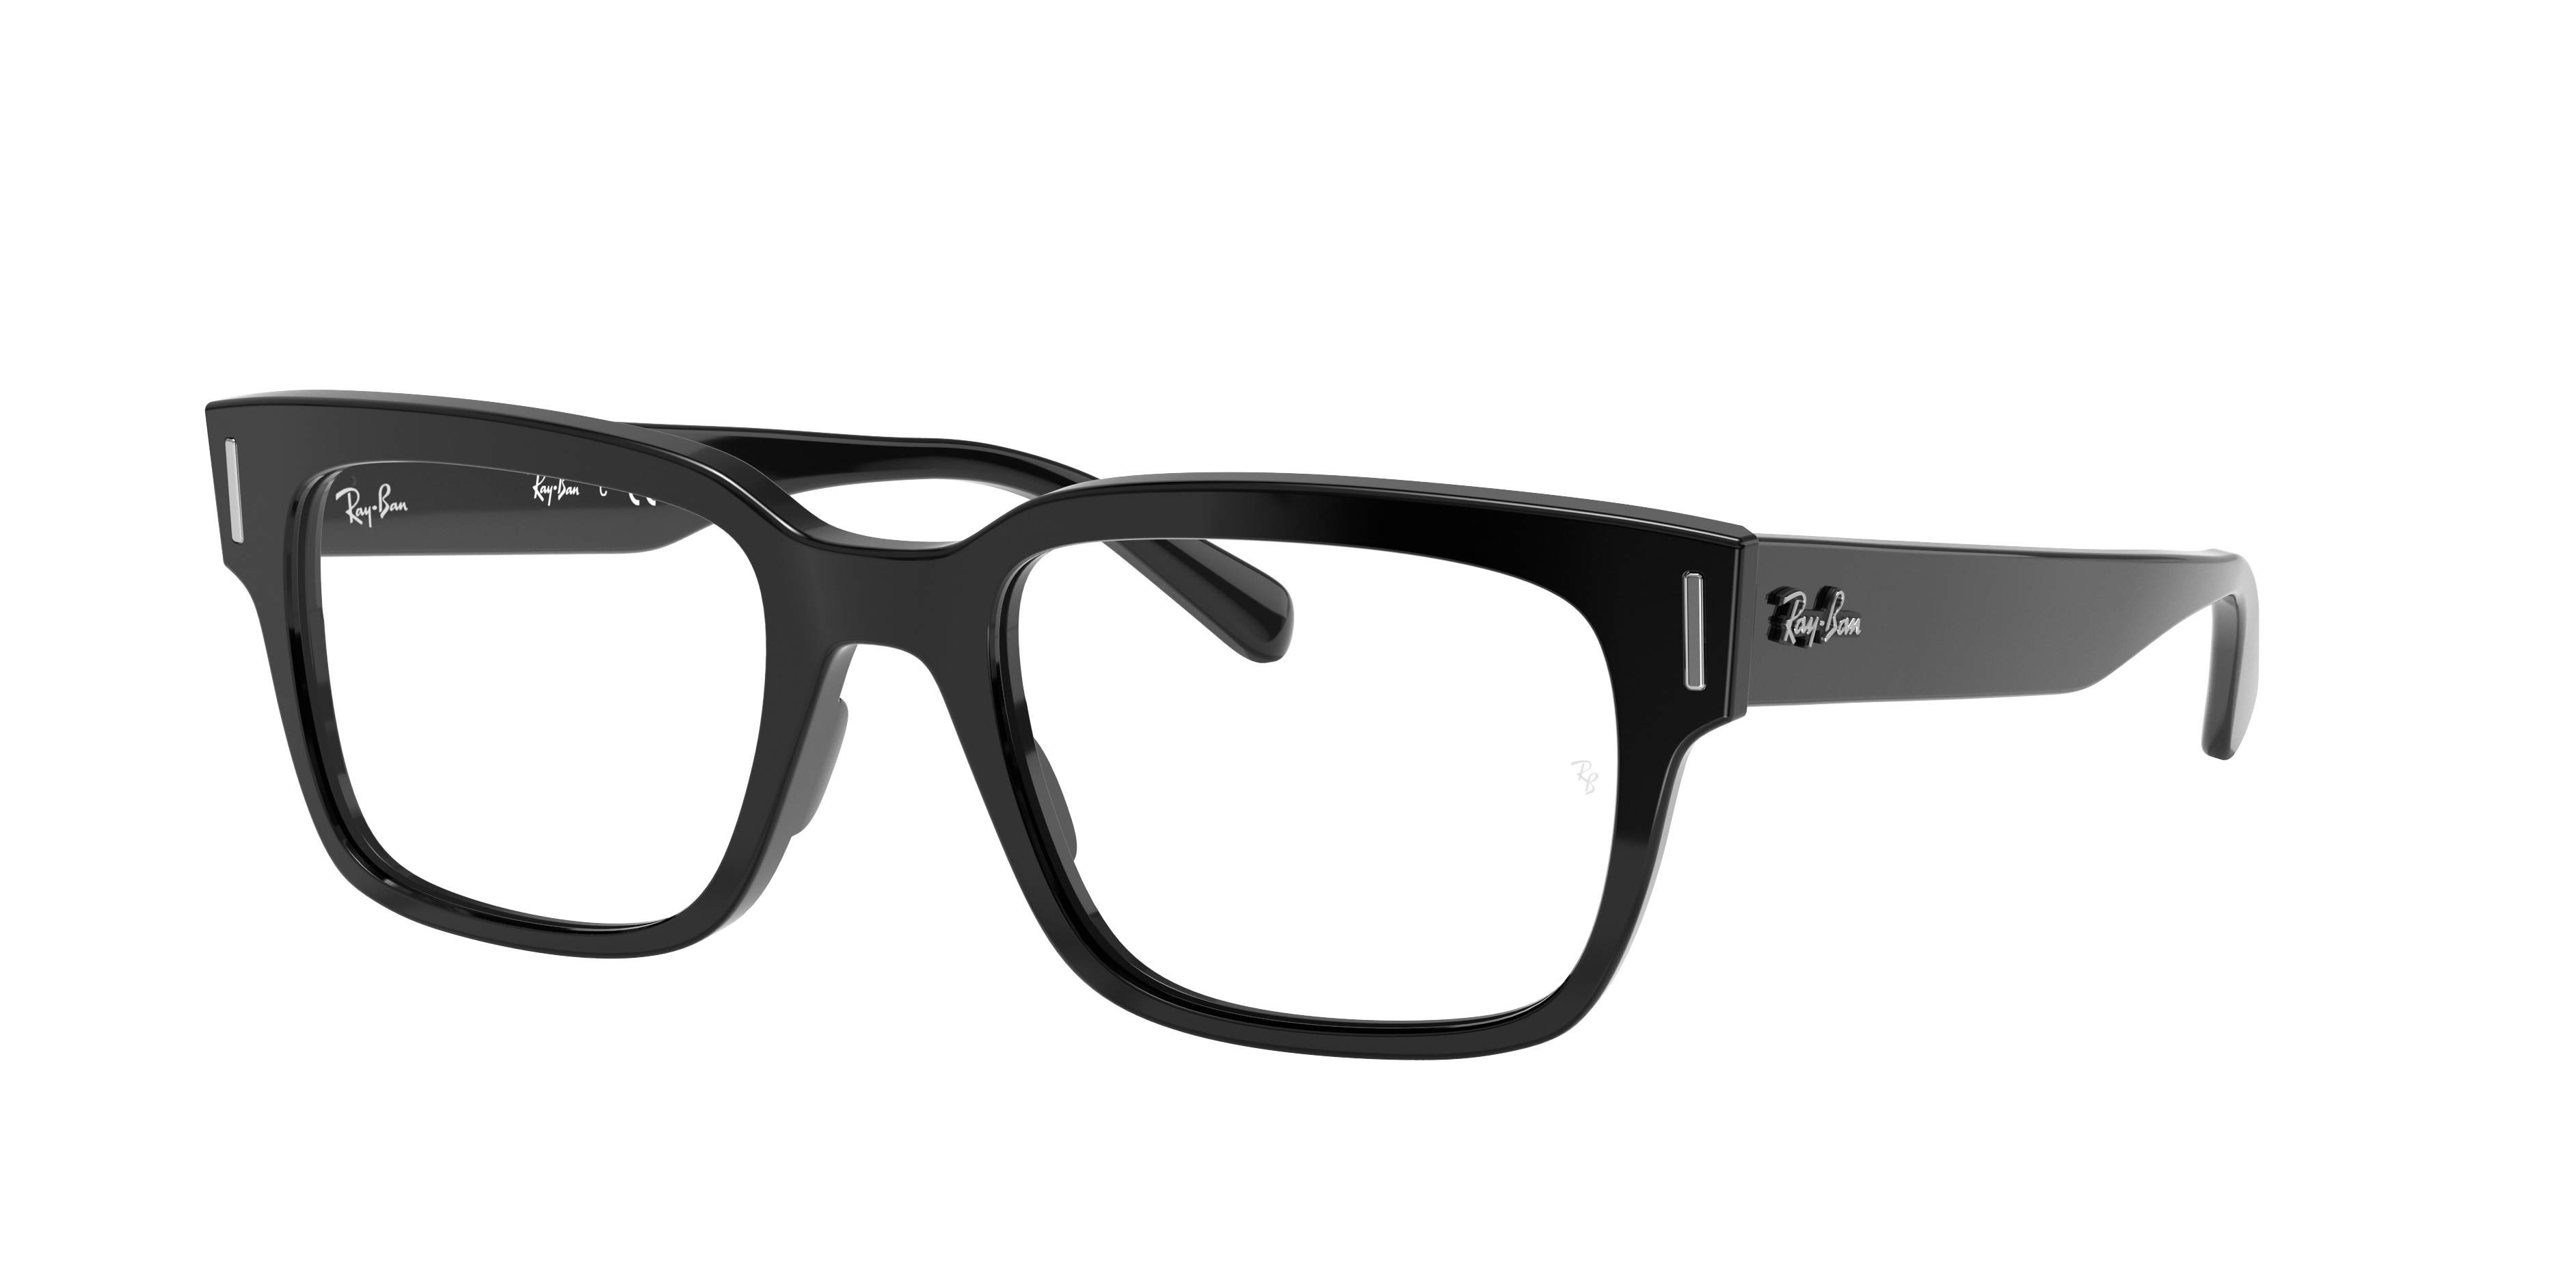 upside down make it flat soil Jeffrey Optics Eyeglasses with Black Frame | Ray-Ban®